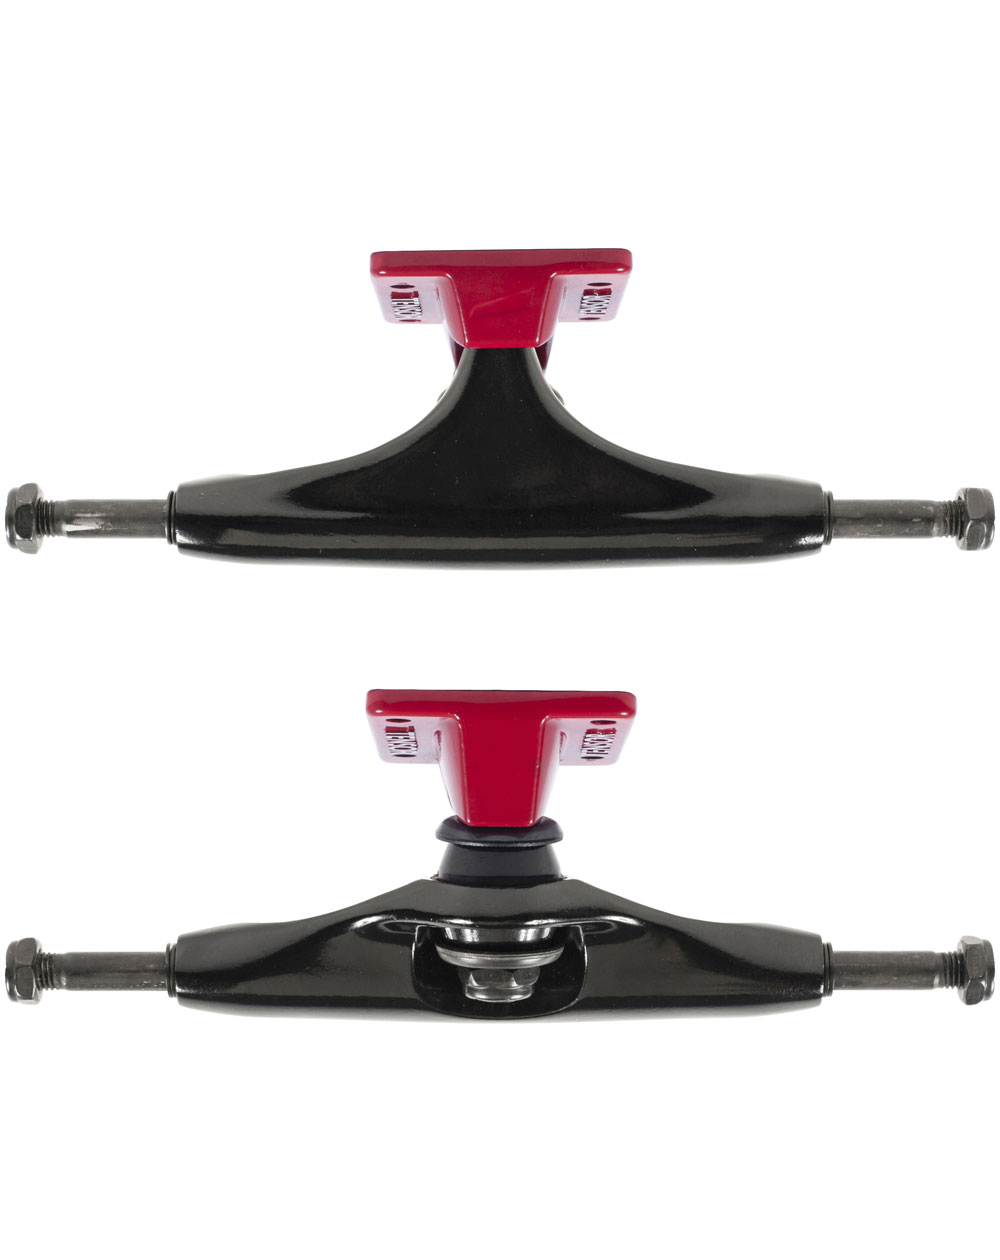 Tensor Trucks Skate Alloys 5.25" Black/Red 2 peças